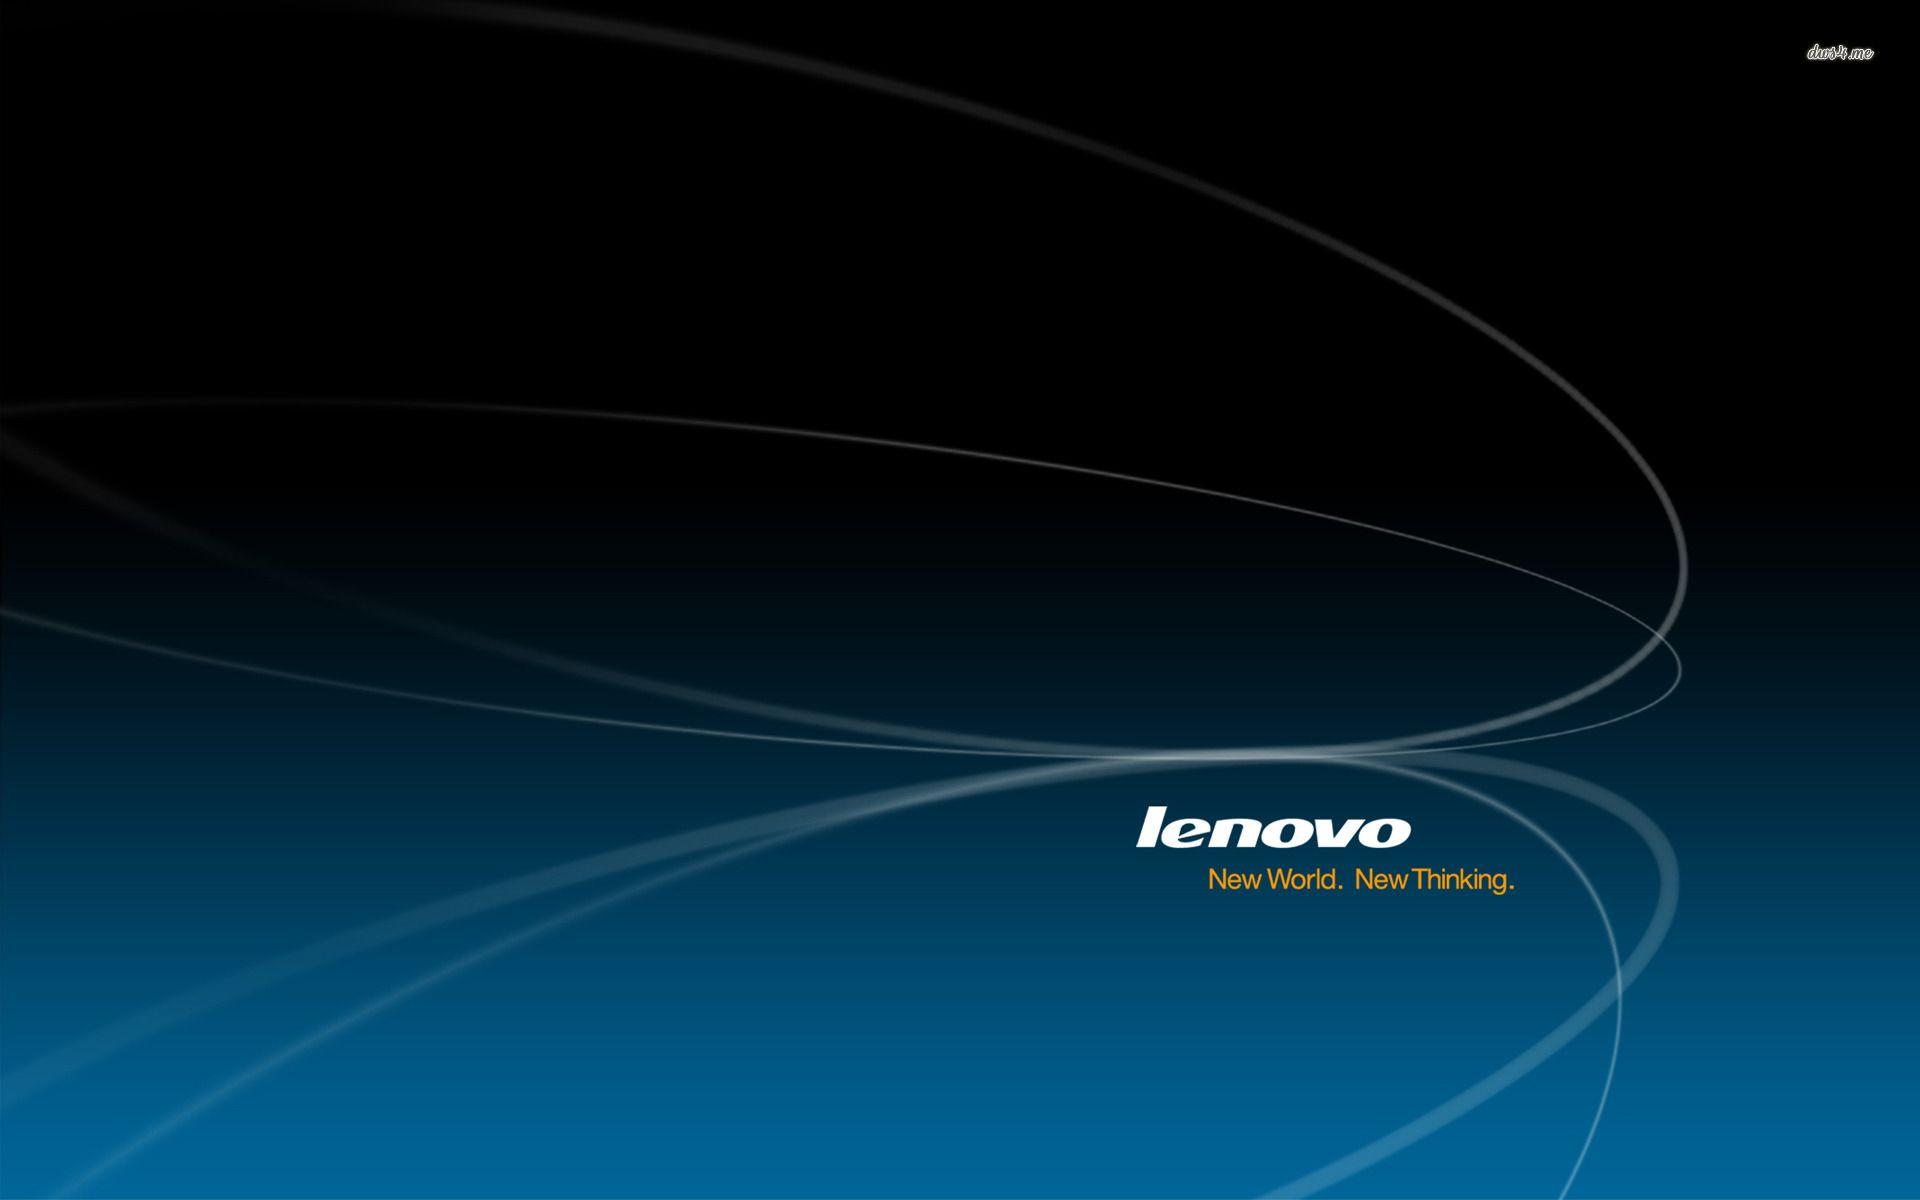 Lenovo Desktop Wallpaper Downloads